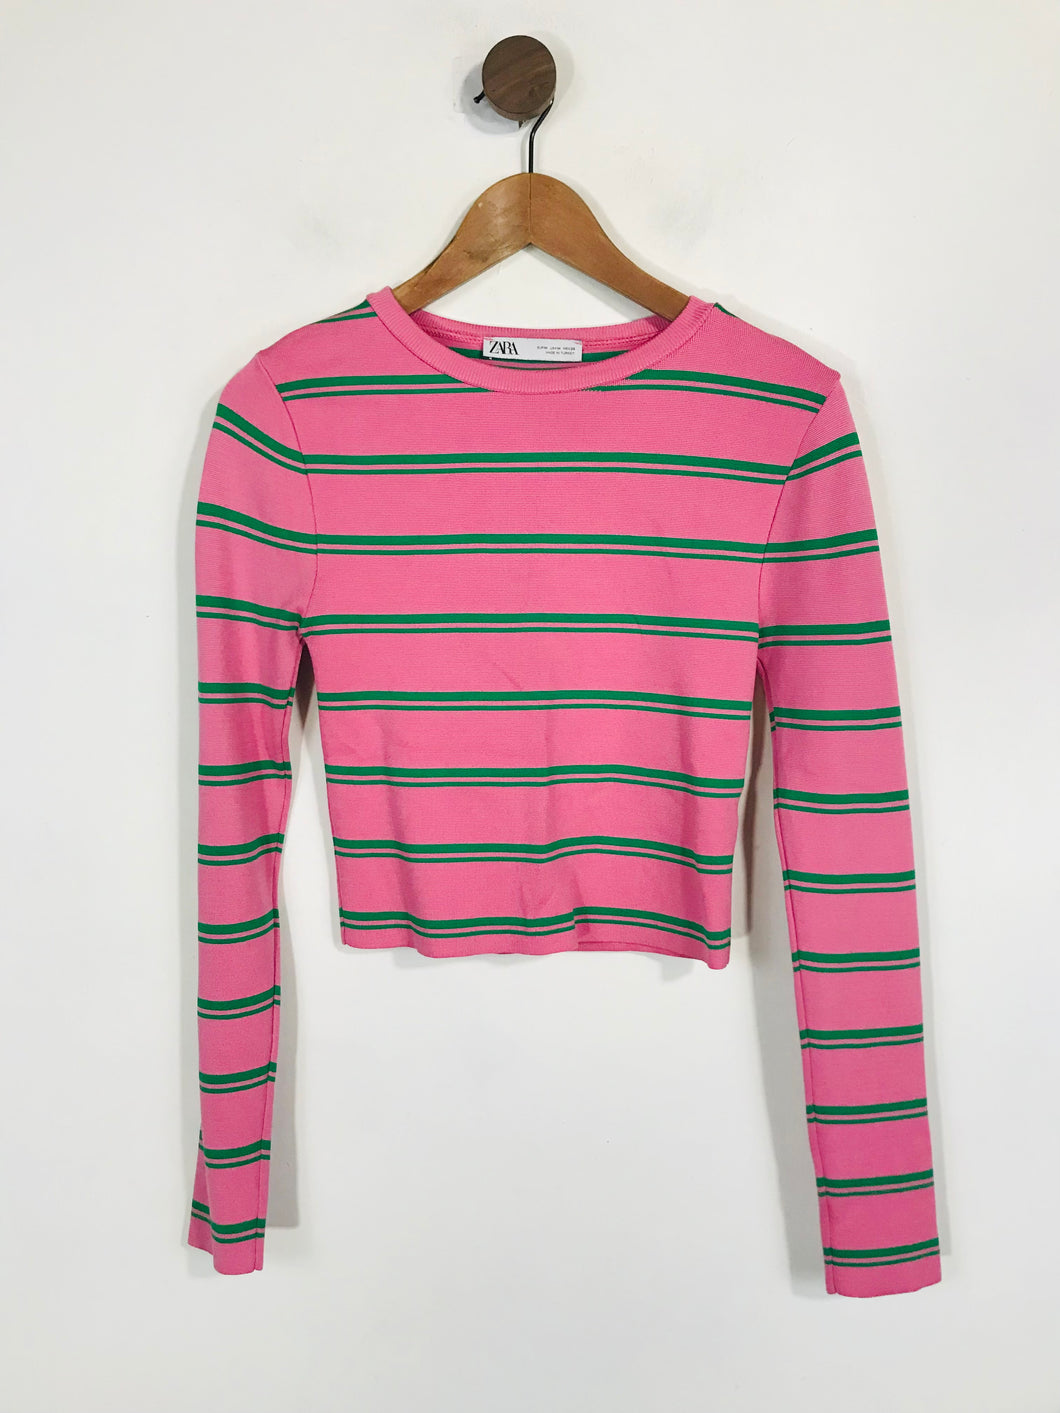 Zara Women's Striped Crop T-Shirt | M UK10-12 | Pink